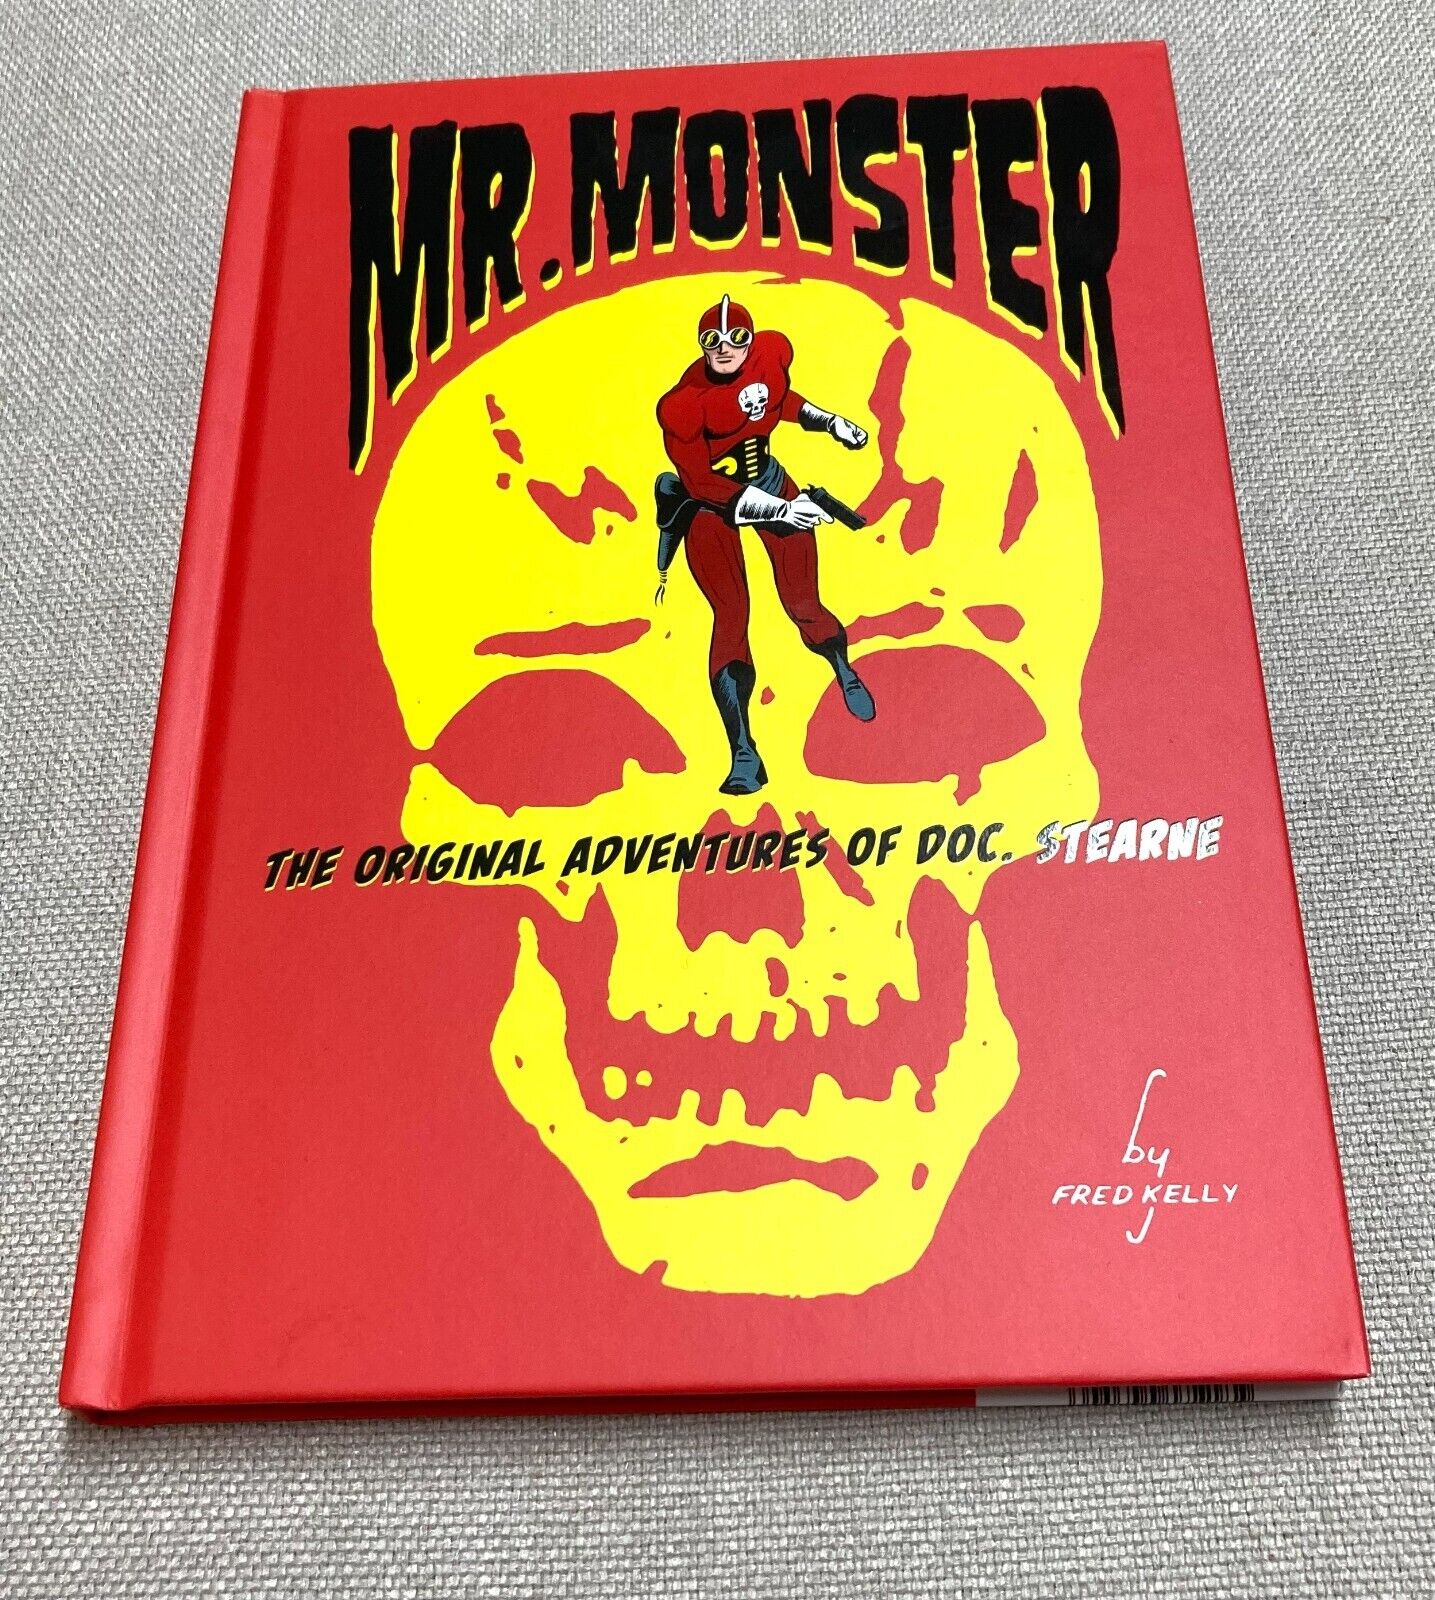 Mr. Monster: Original Adventures Of Doc Stearne (Fred Kelly) 2021 Hardback New